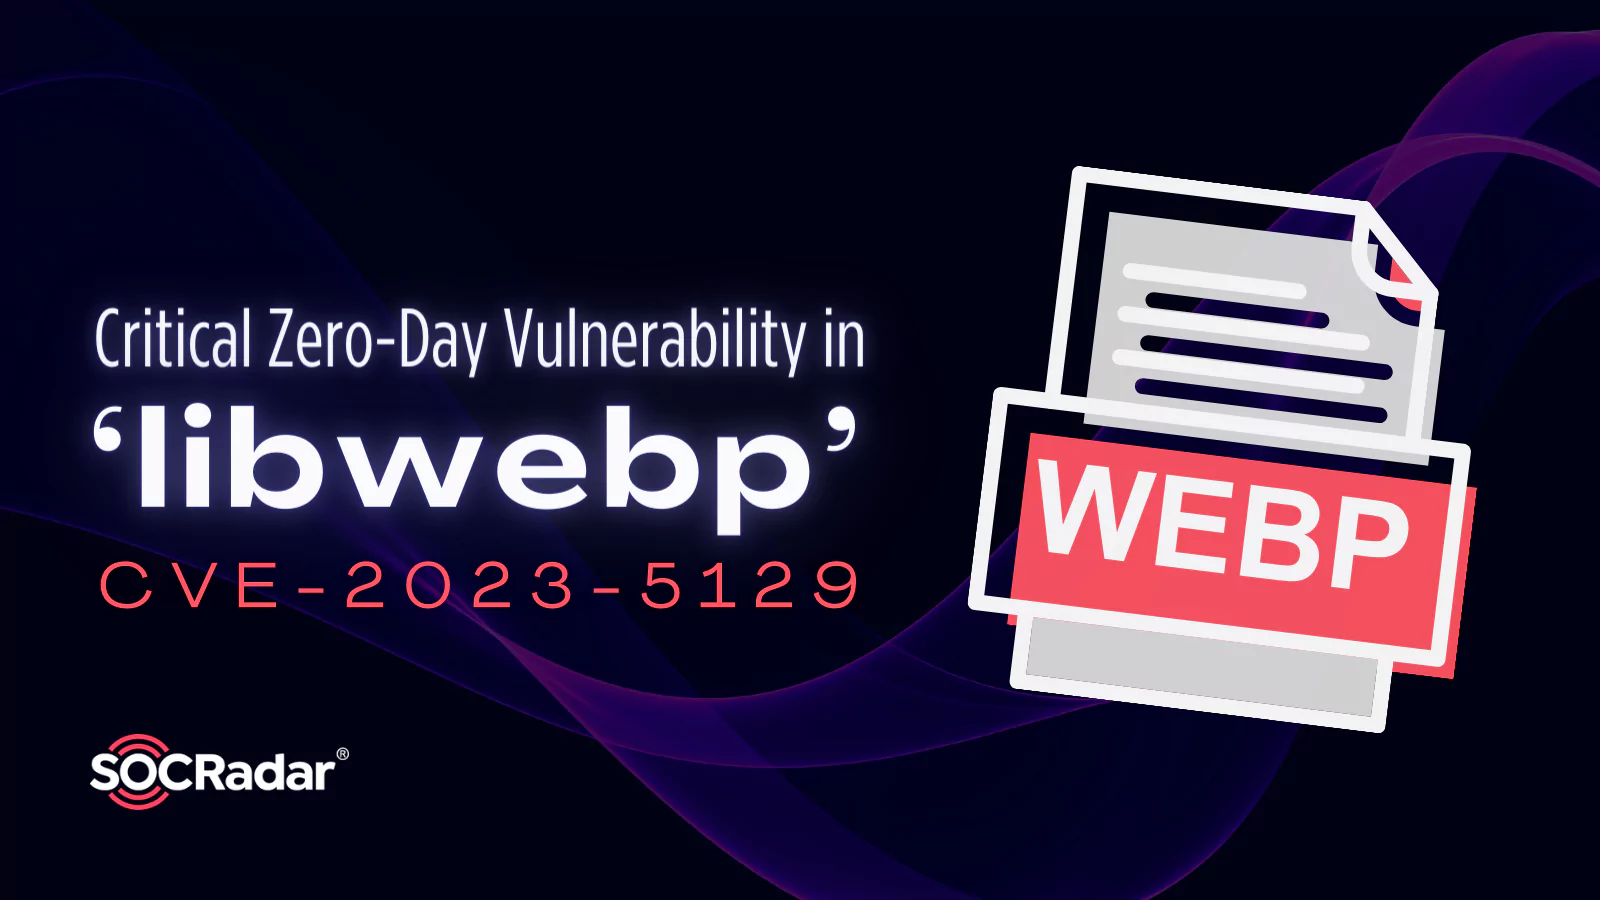 SOCRadar® Cyber Intelligence Inc. | Critical Zero-Day Vulnerability in ‘libwebp’: CVE-2023-4863 Reassigned as CVE-2023-5129